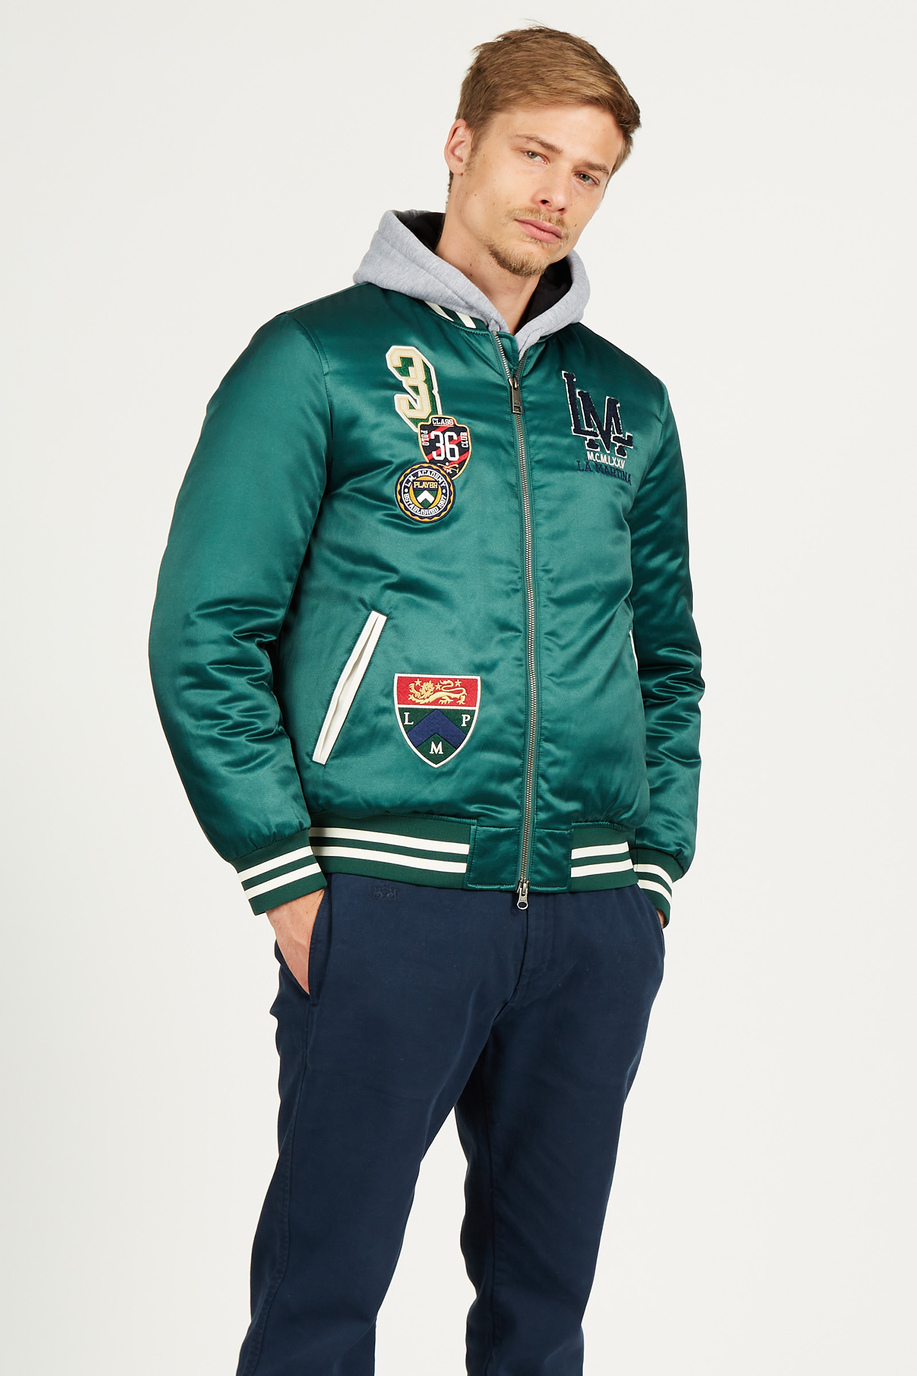 Men's bomber jacket in satin effect cotton blend, regular fit - Outerwear and Jackets | La Martina - Official Online Shop